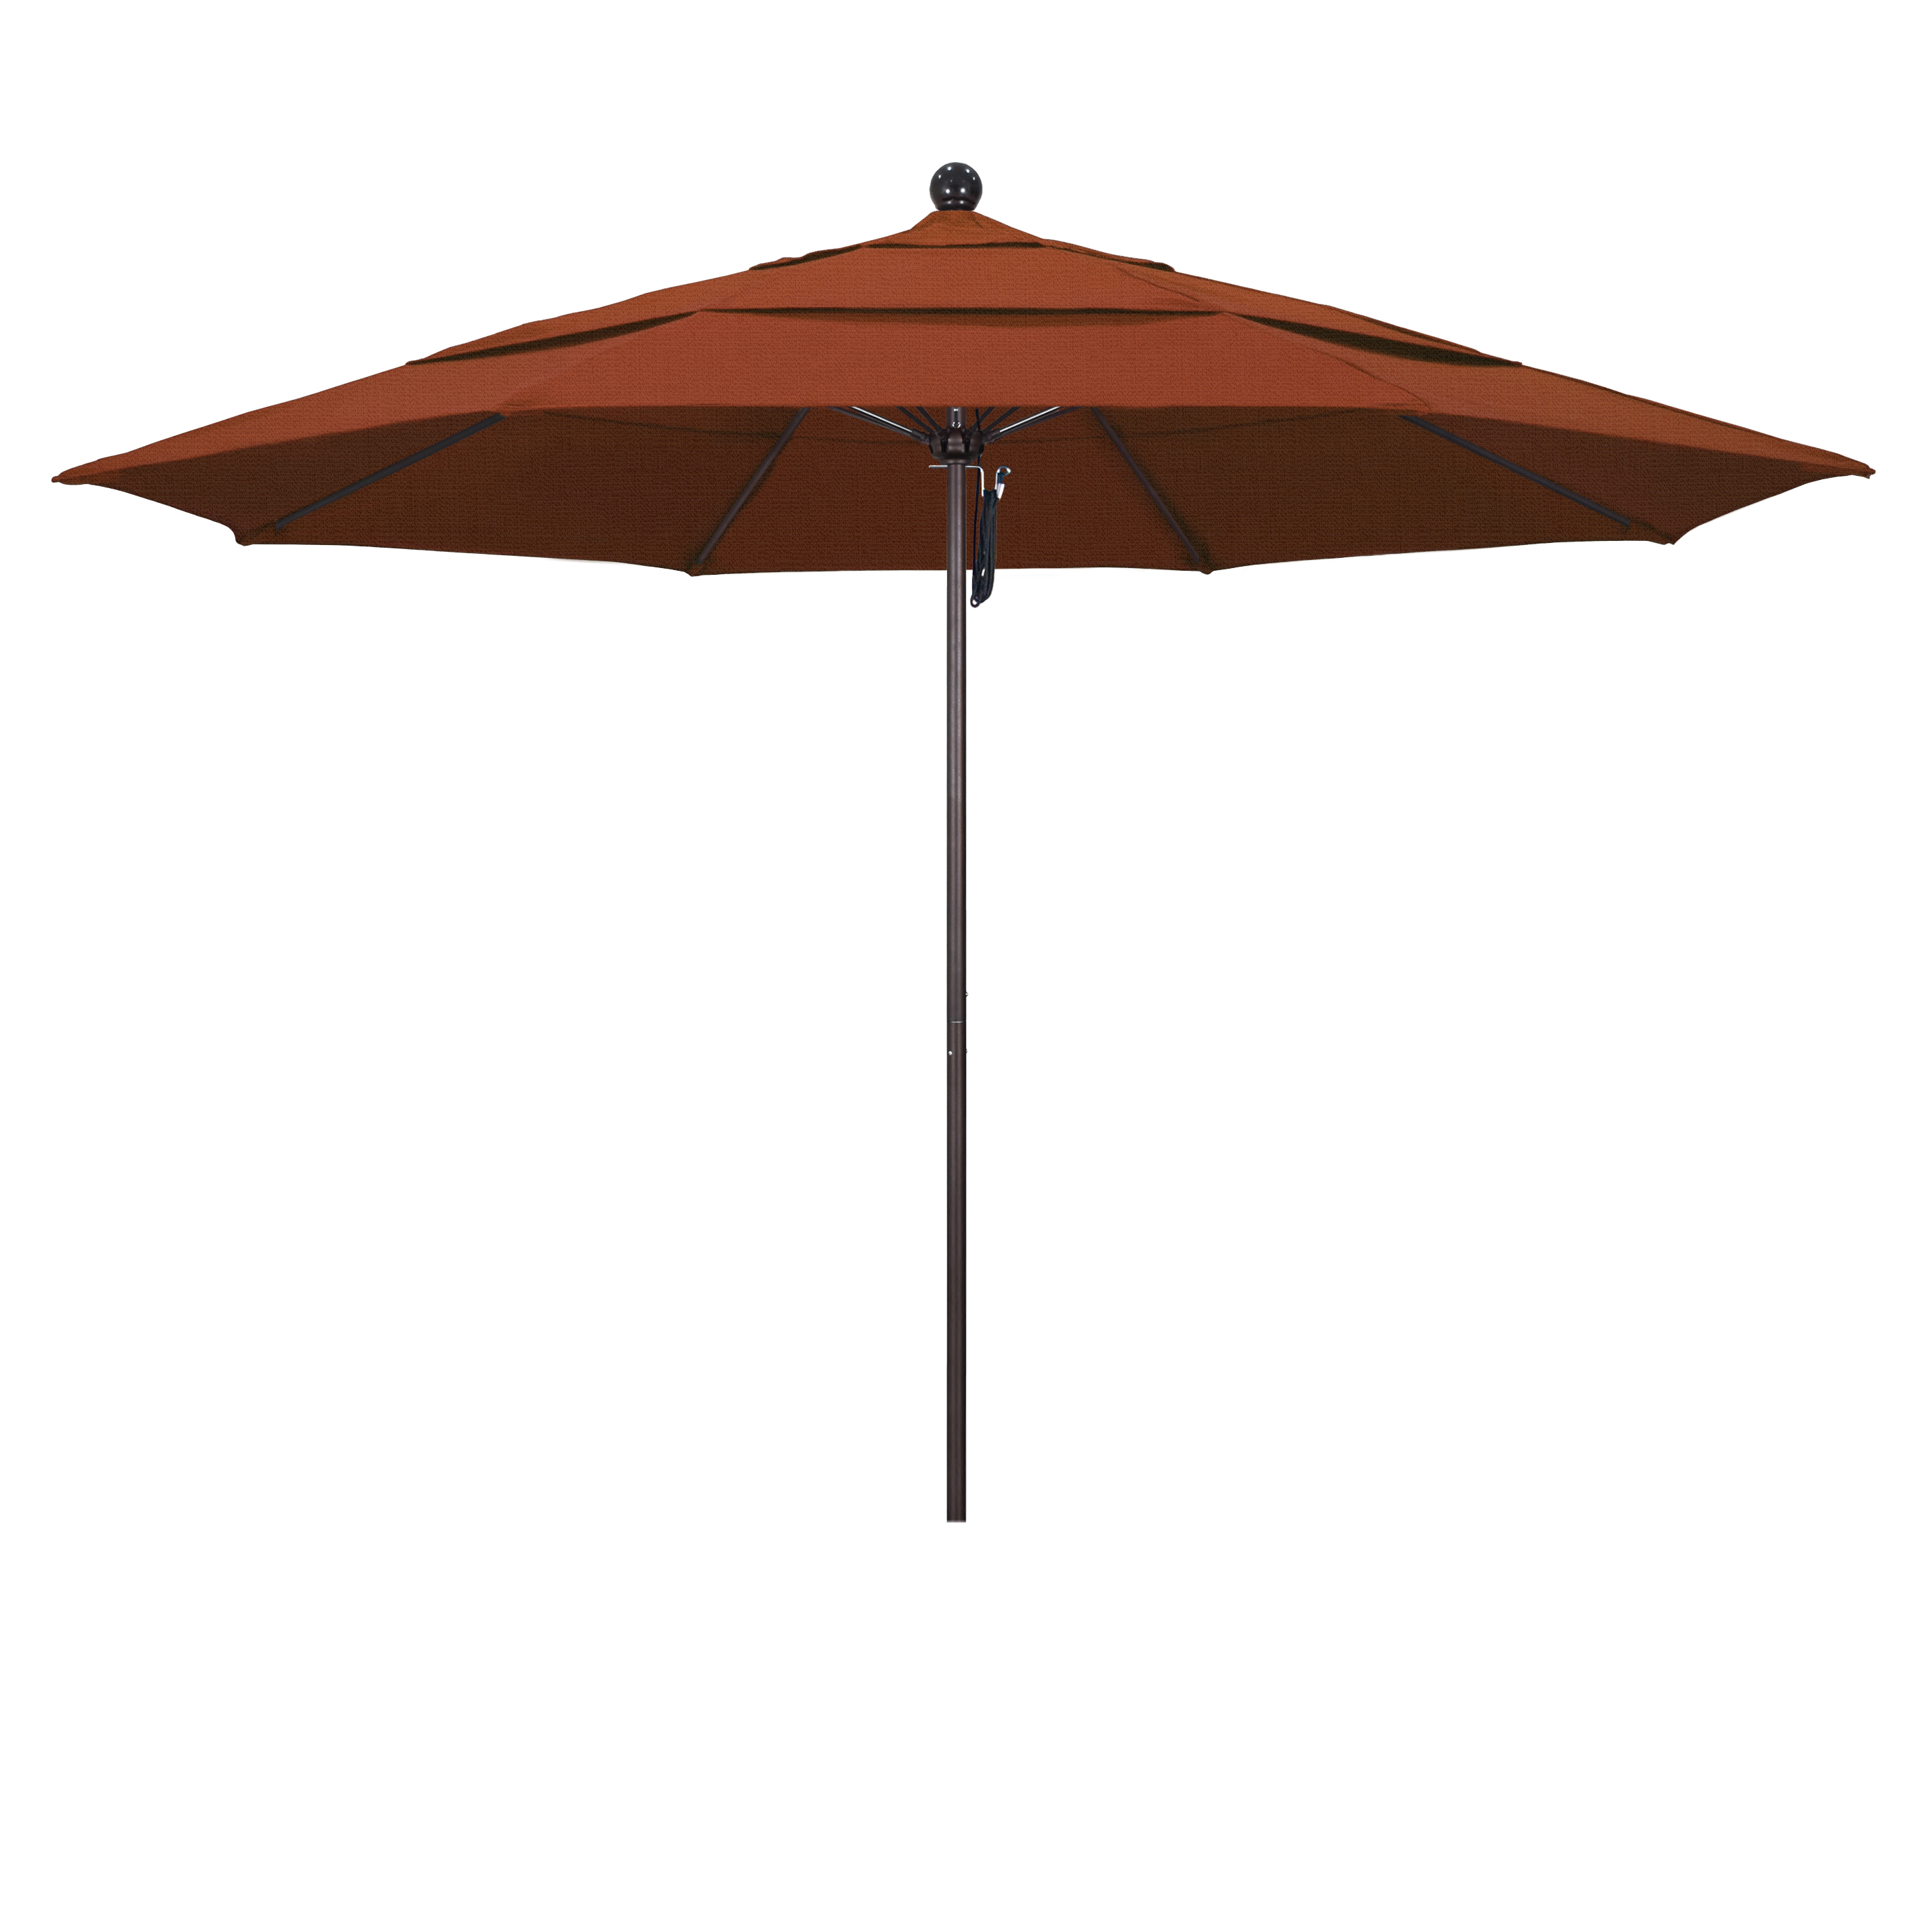 Picture of California Umbrella ALTO118117-F69-DWV 11 ft. Fiberglass Market Umbrella PO DVent Bronze-Olefin-Terracota